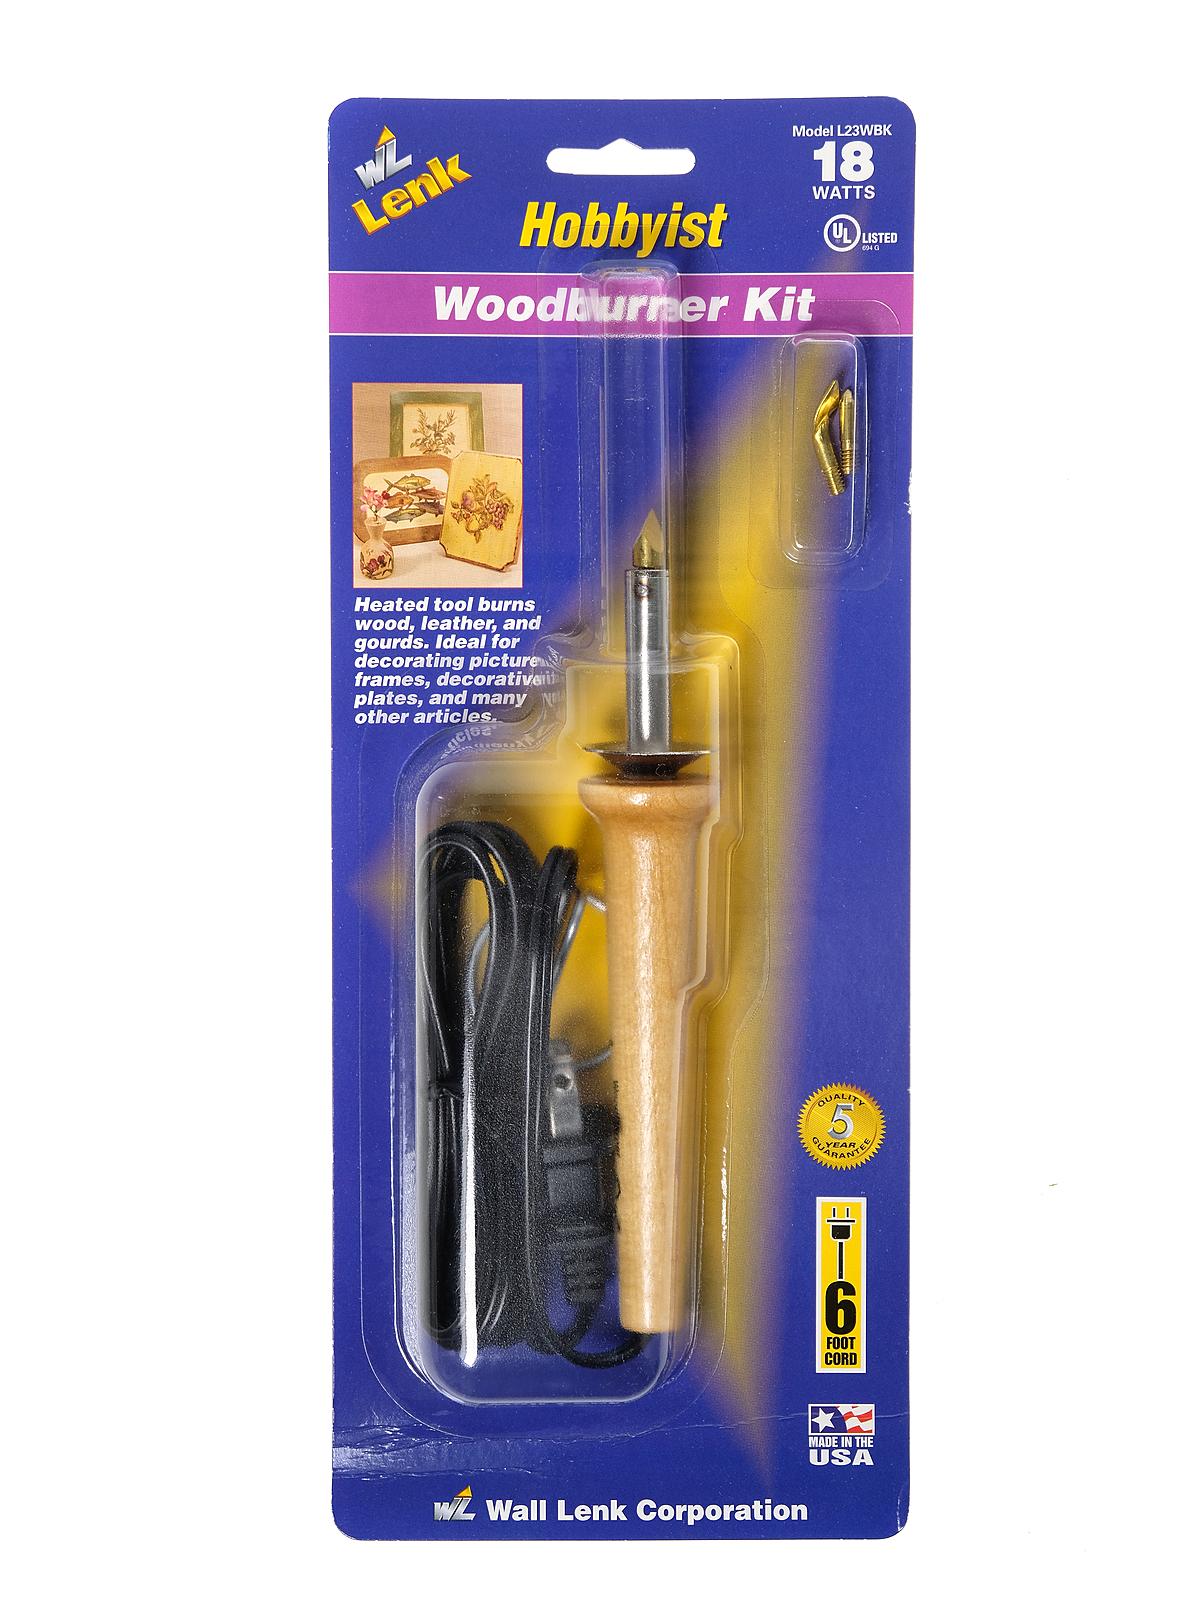 Woodburner Kits Hobbyist Woodburning Kit